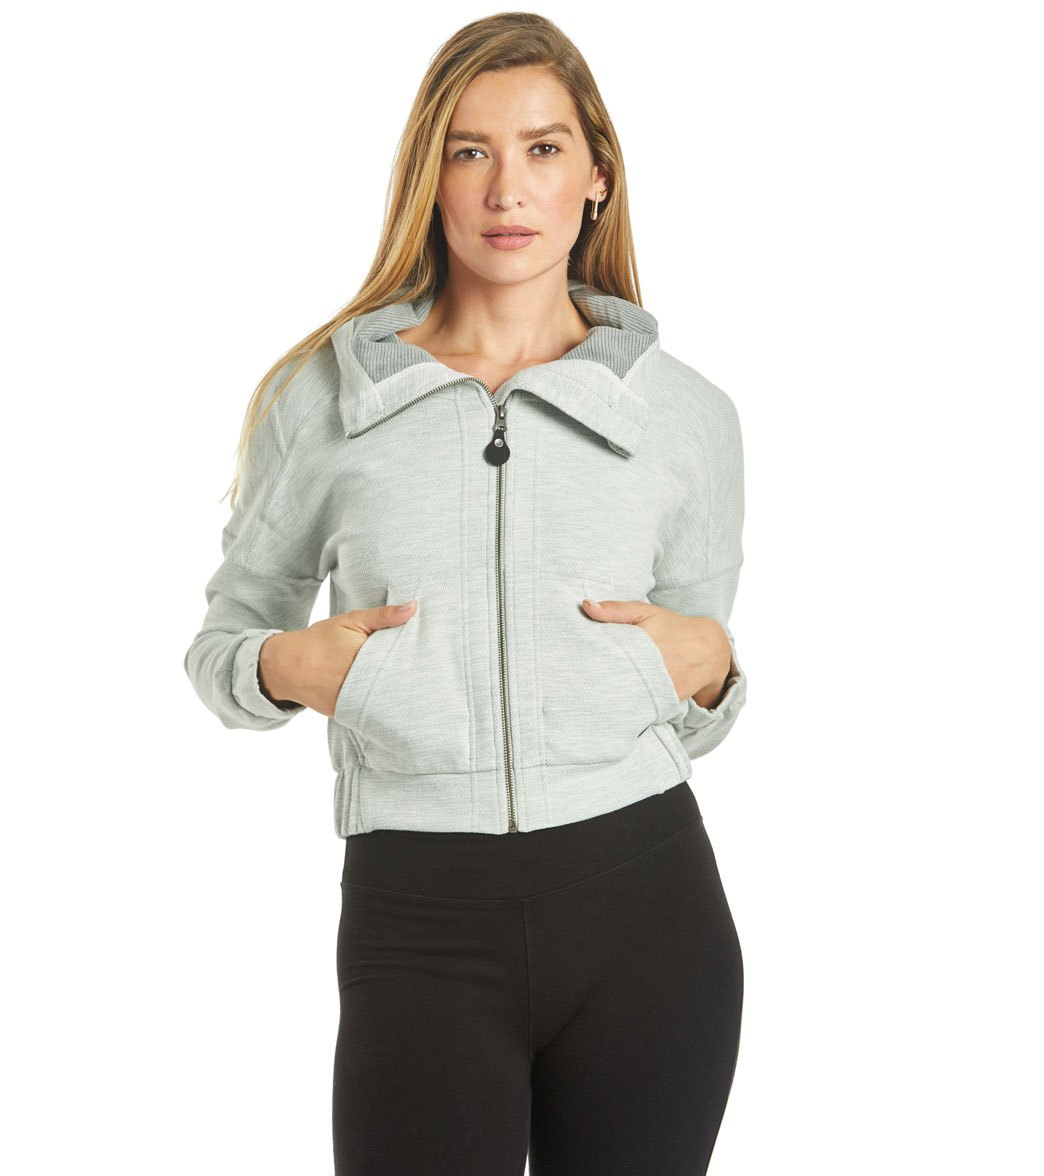  Jackets For Women BBL Yoga Sweater Zip Up Long